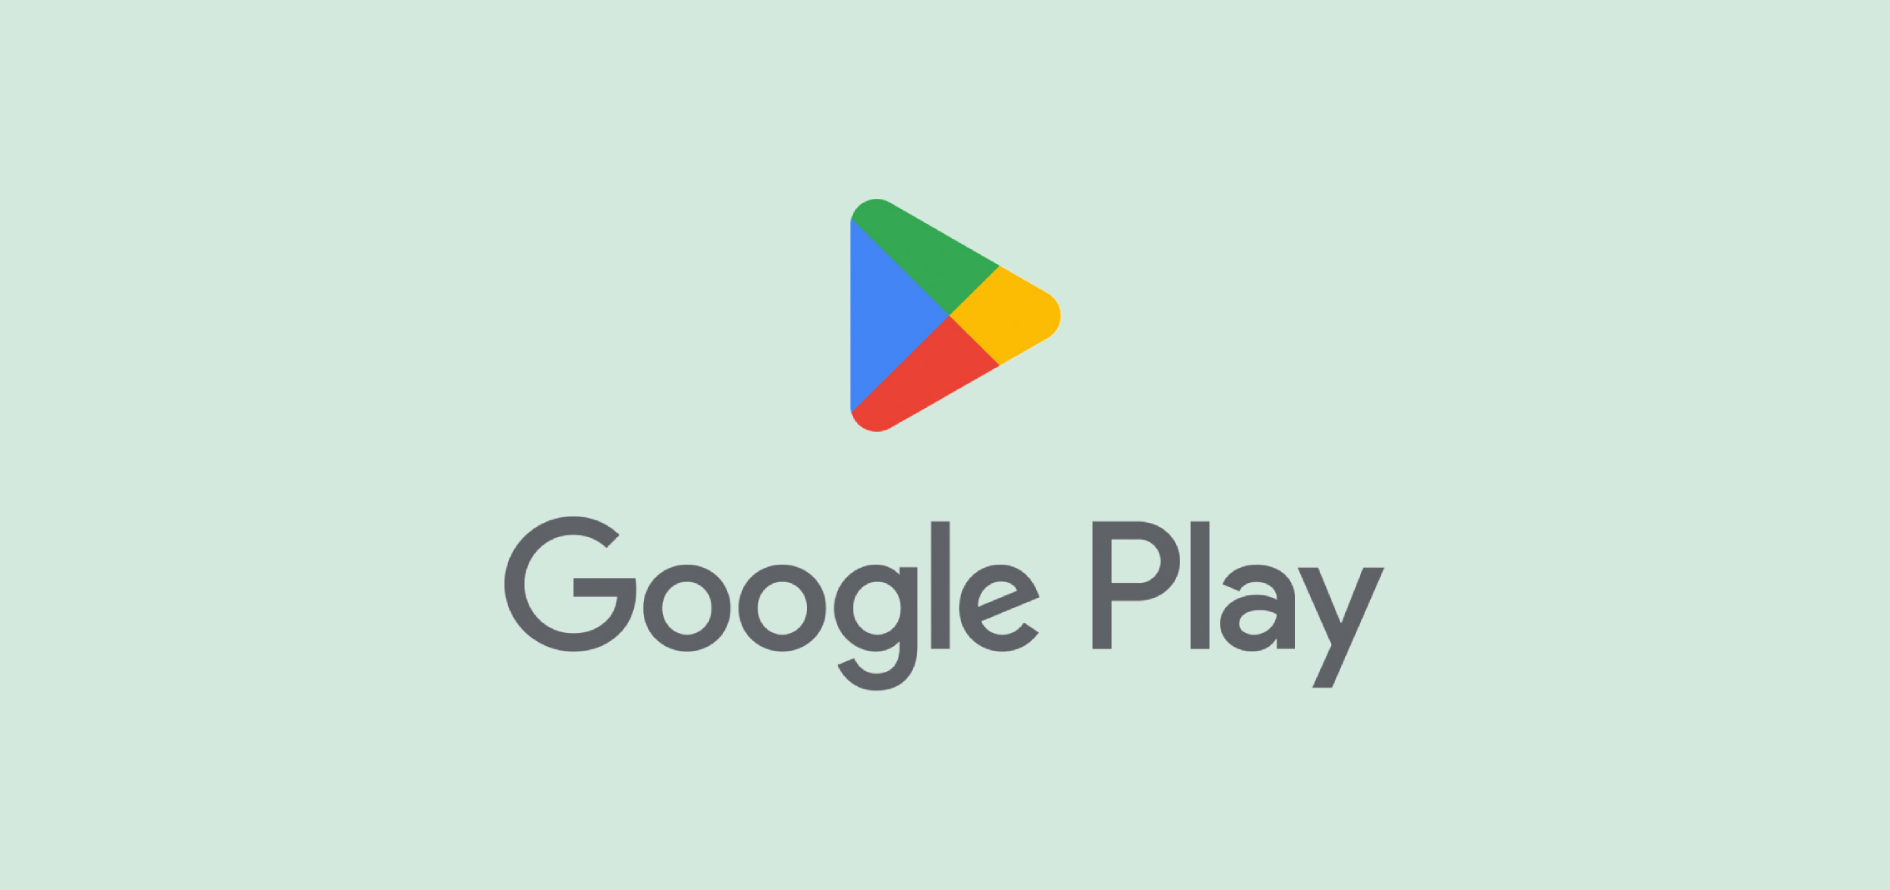 Google Play. Значок Google Play. Google Play Market лого. Иконка Google Play без фона.